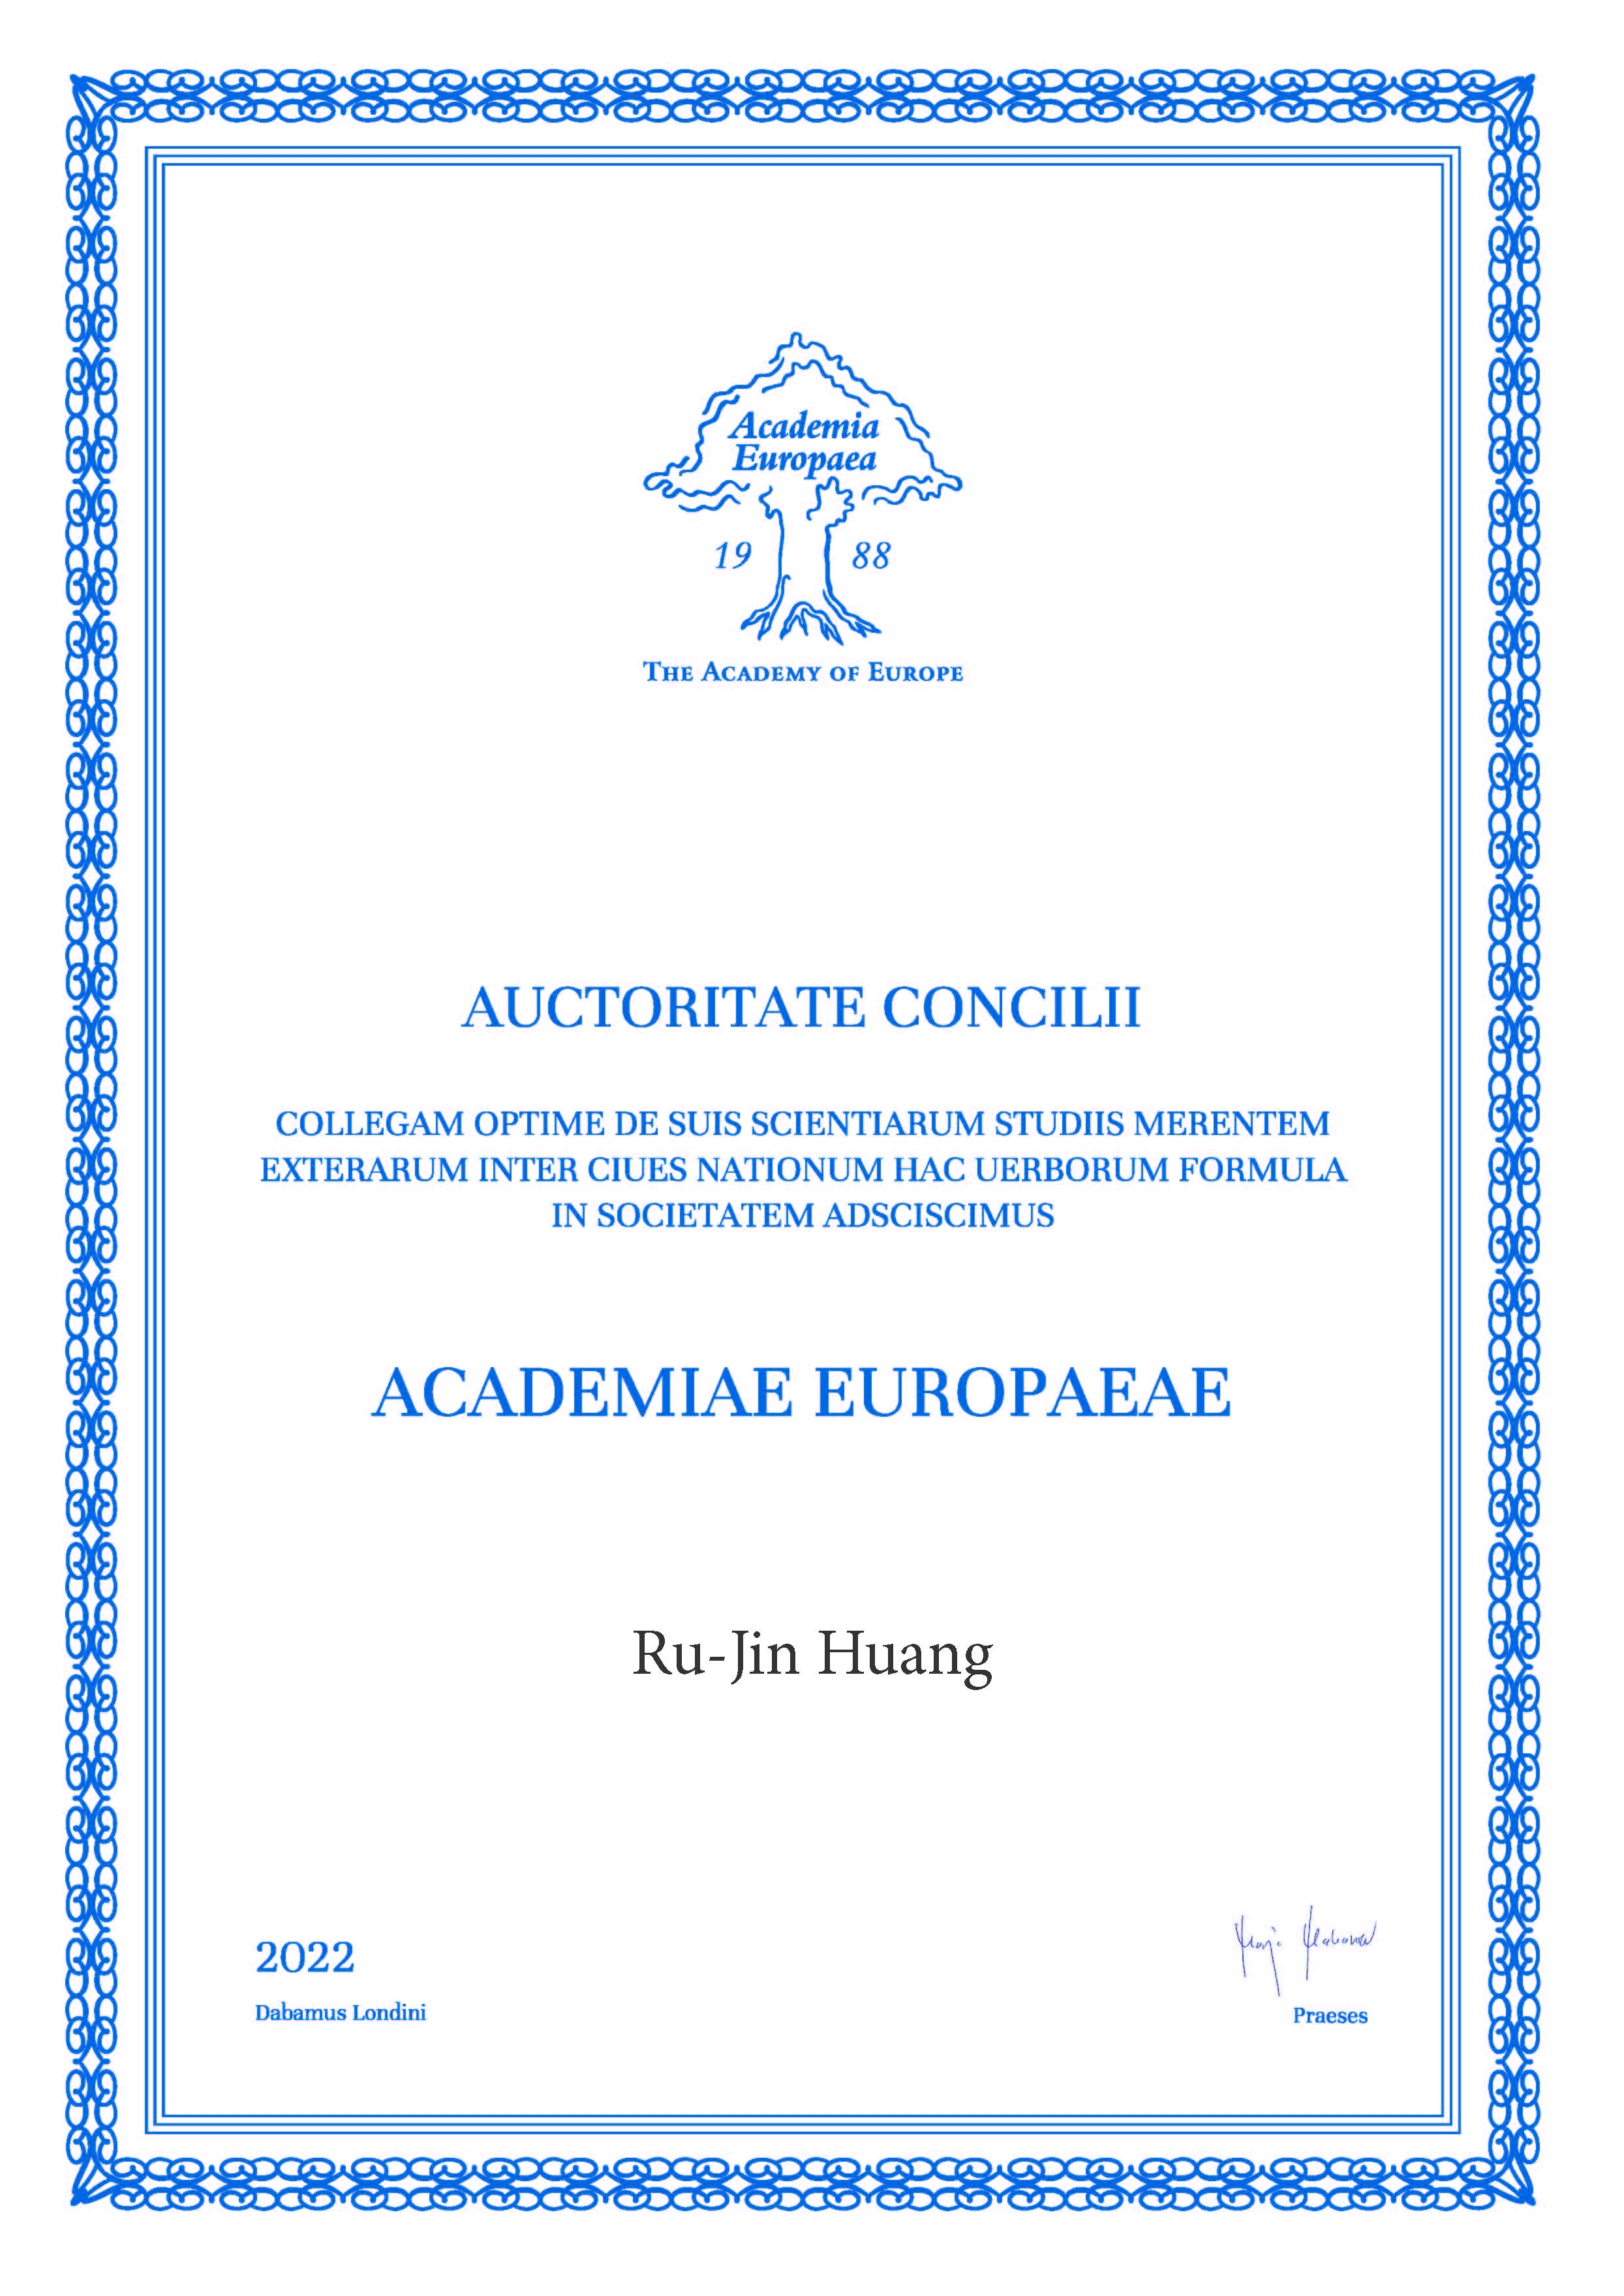 AE Certificate - Ru-Jin Huang.jpg